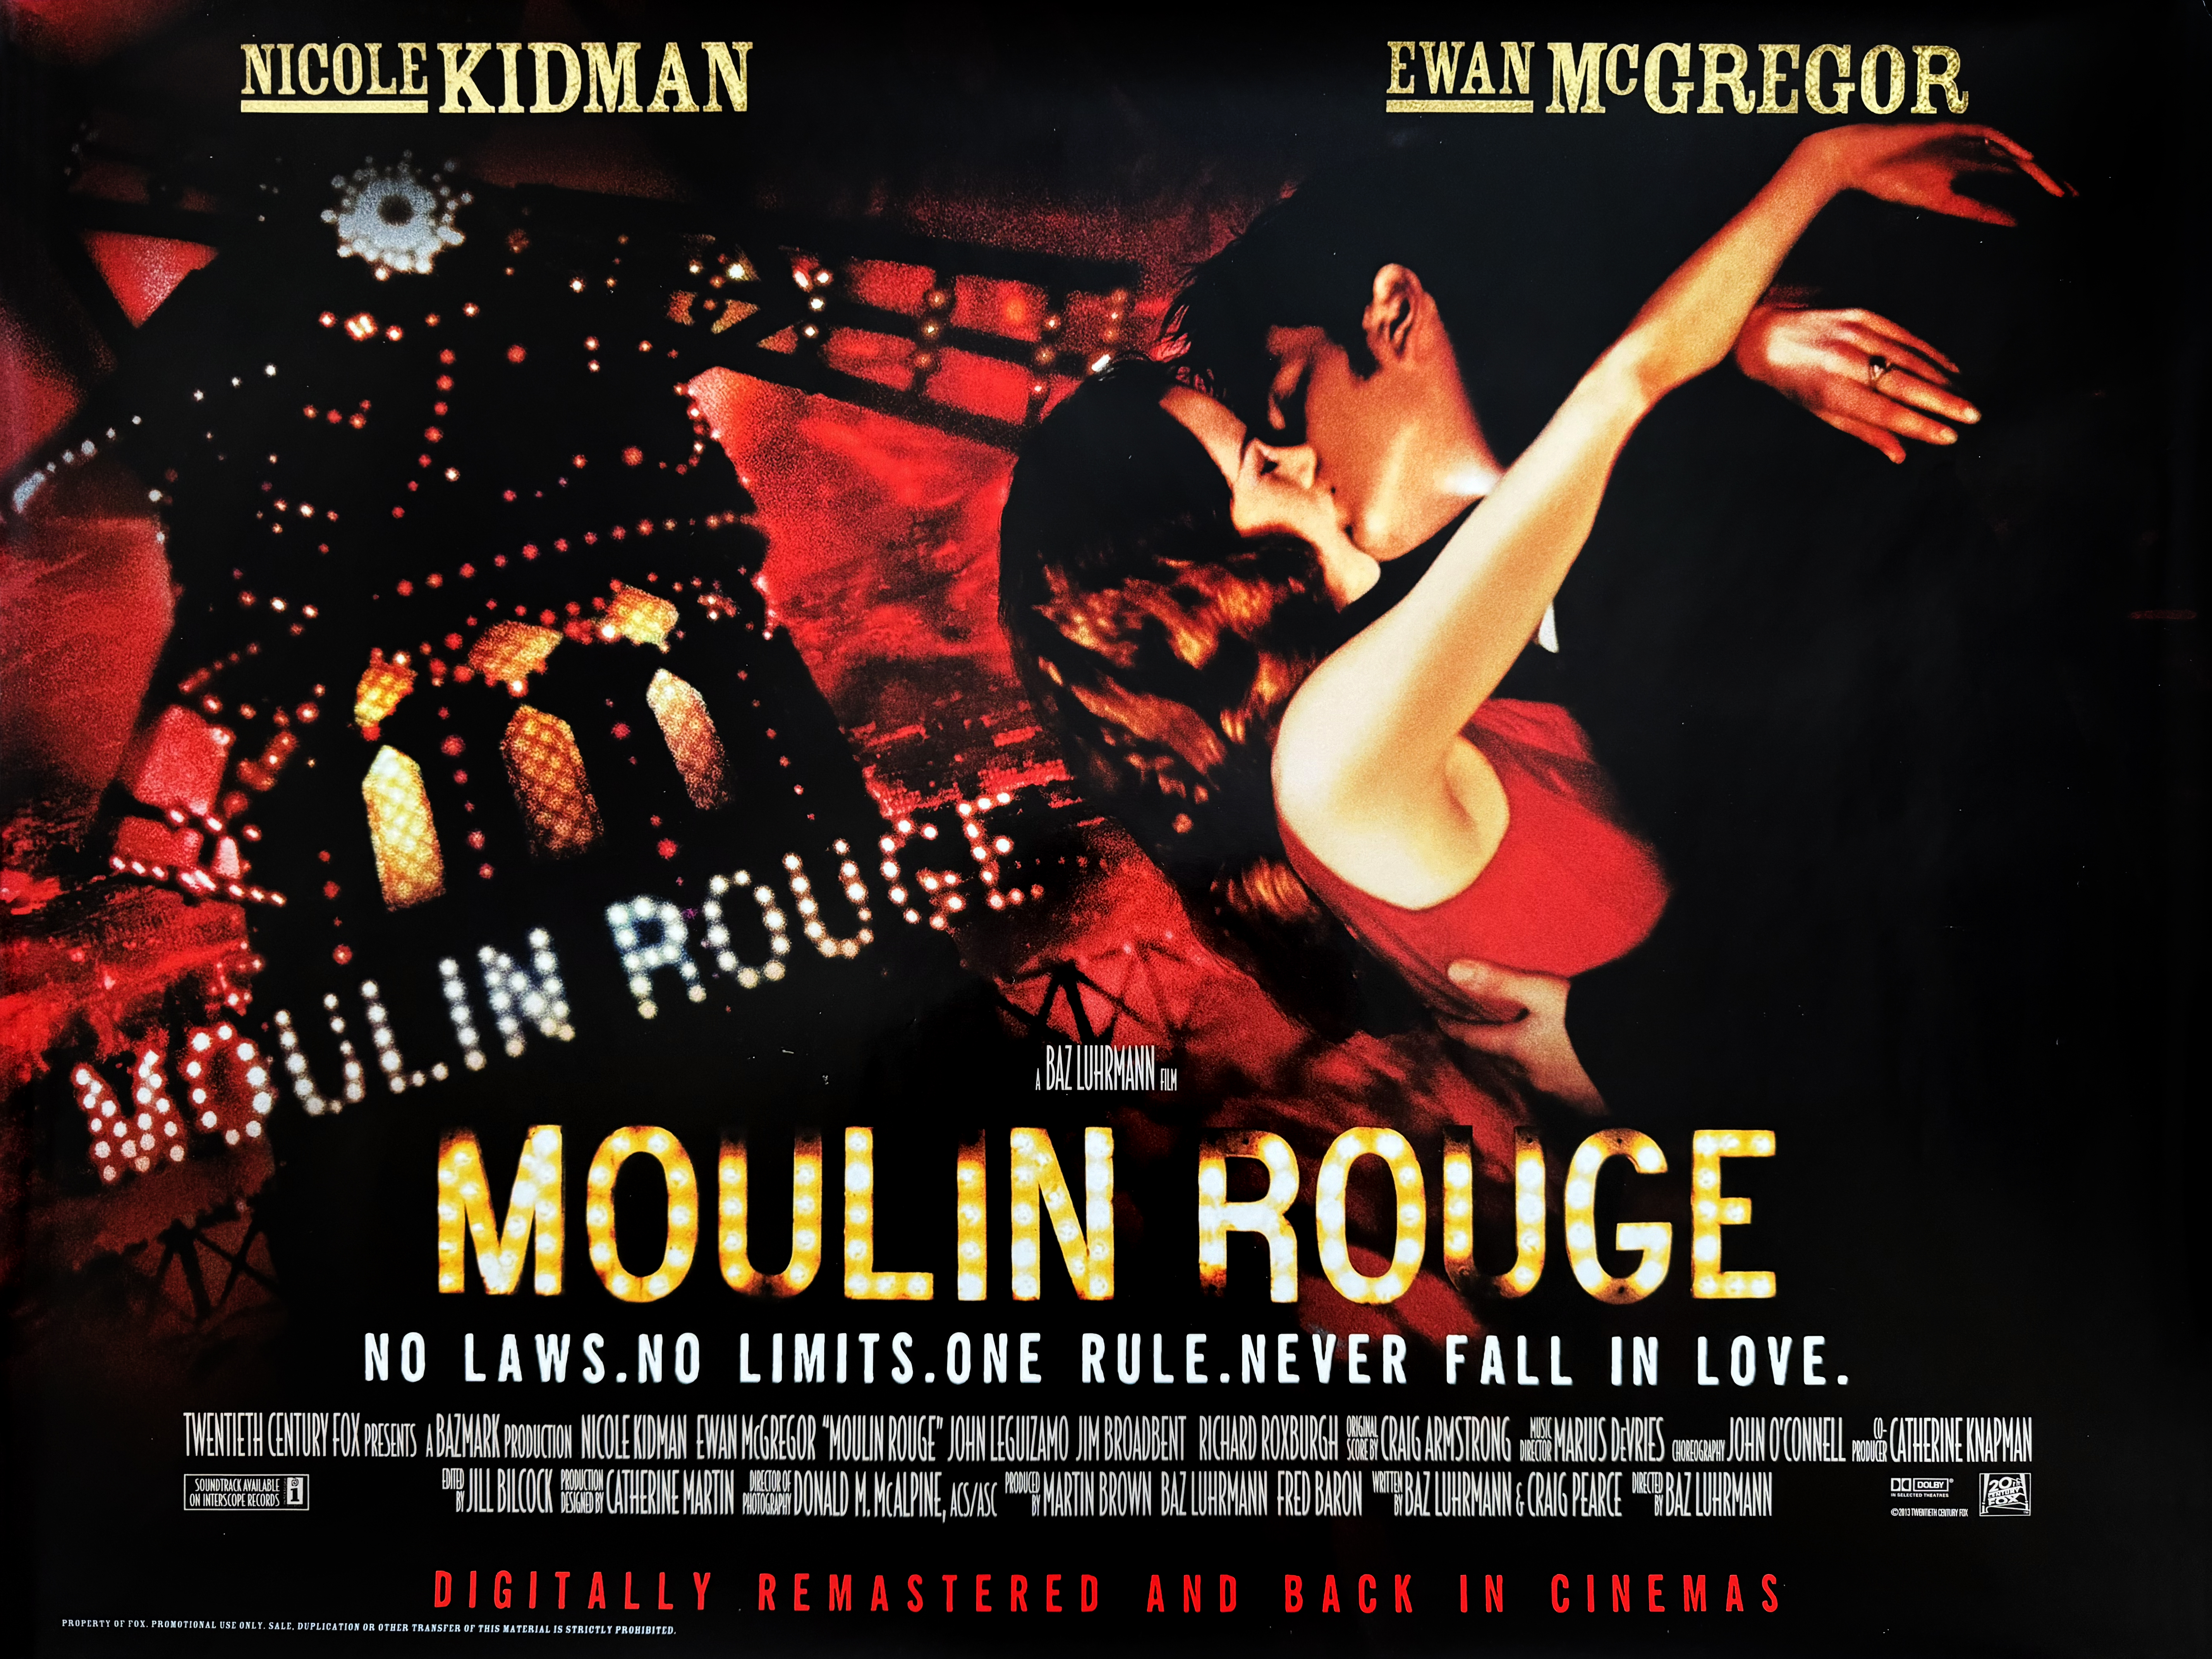 Moulin Rouge movie quad poster